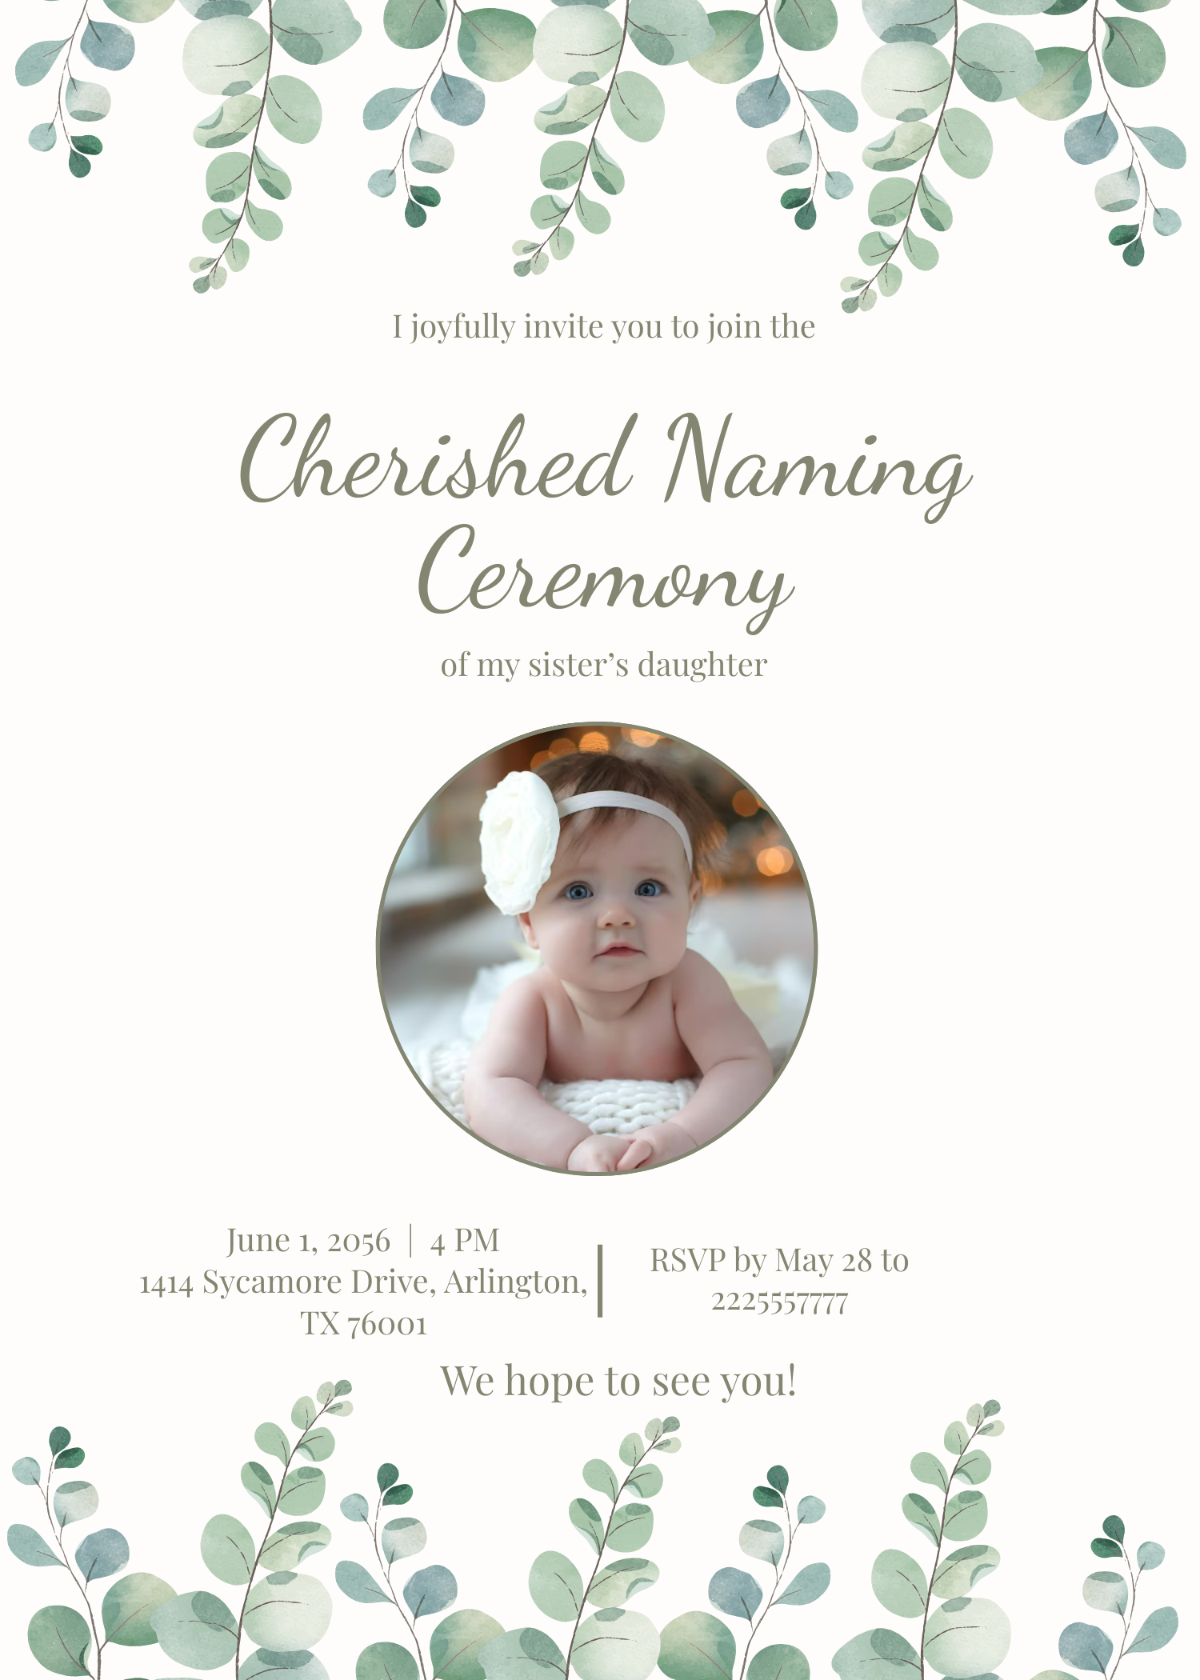 My Sister's Daughter Naming Ceremony Invitation